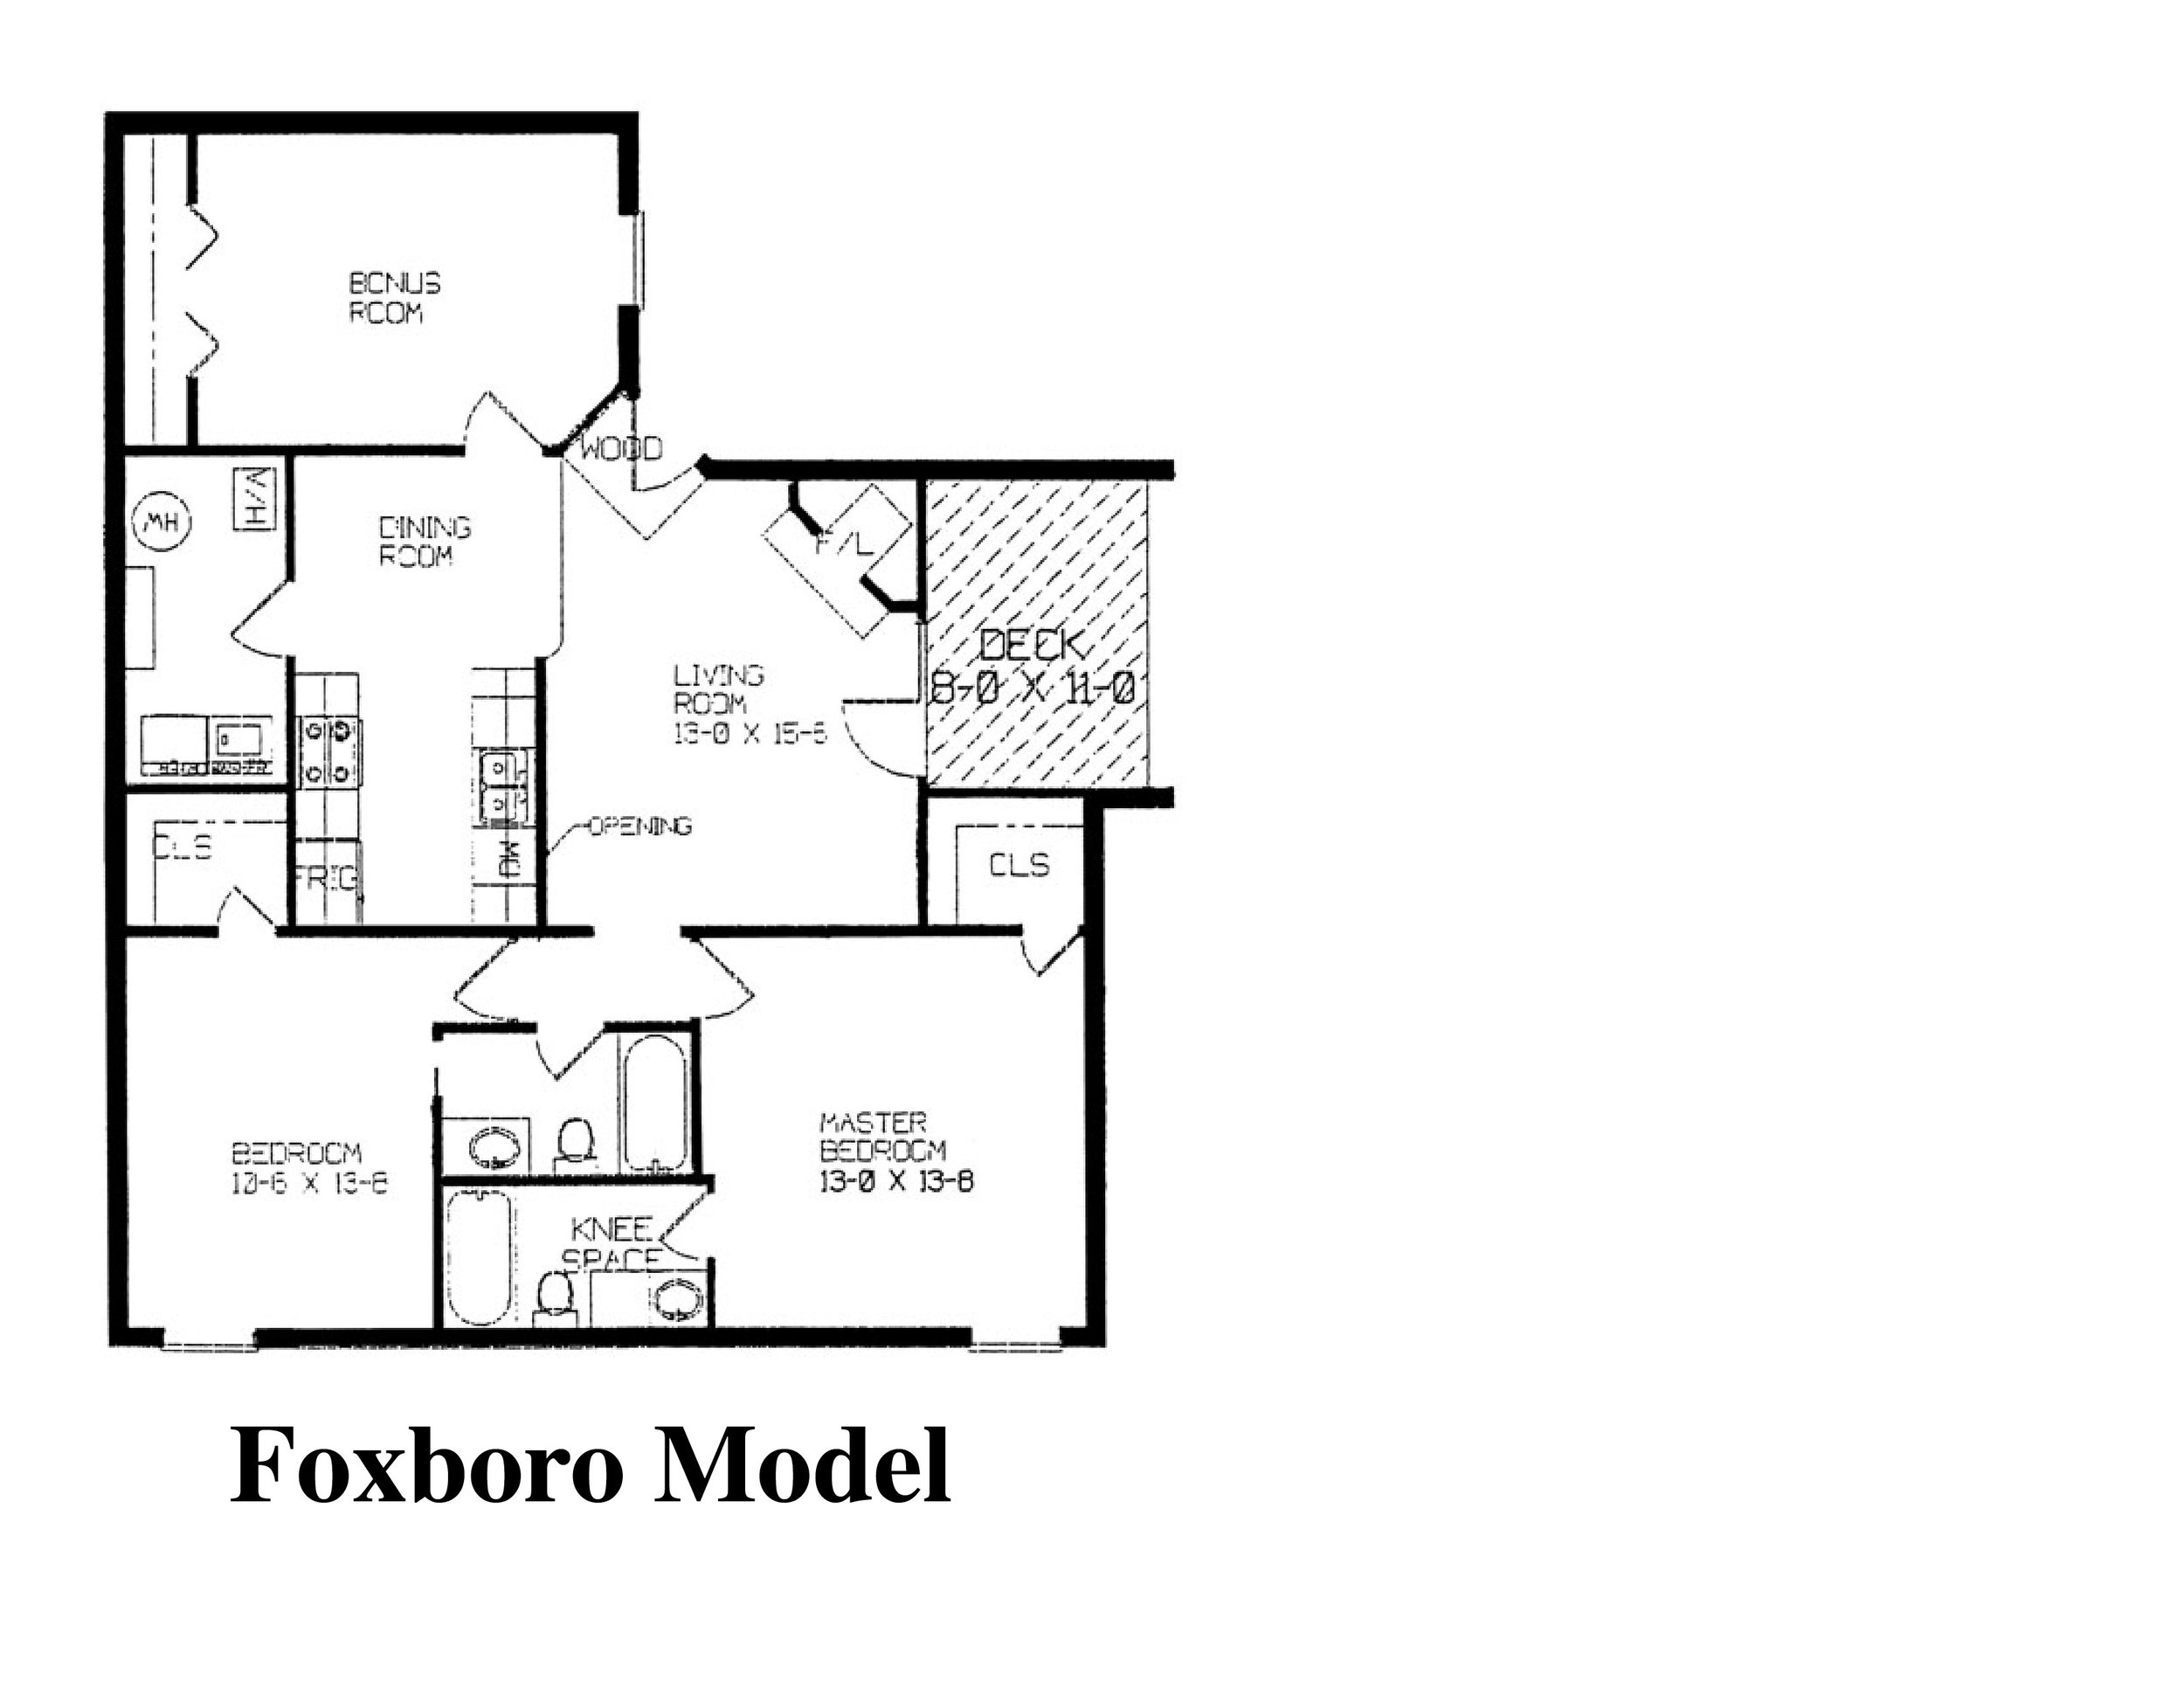 Foxboro Floorplan edited.jpg